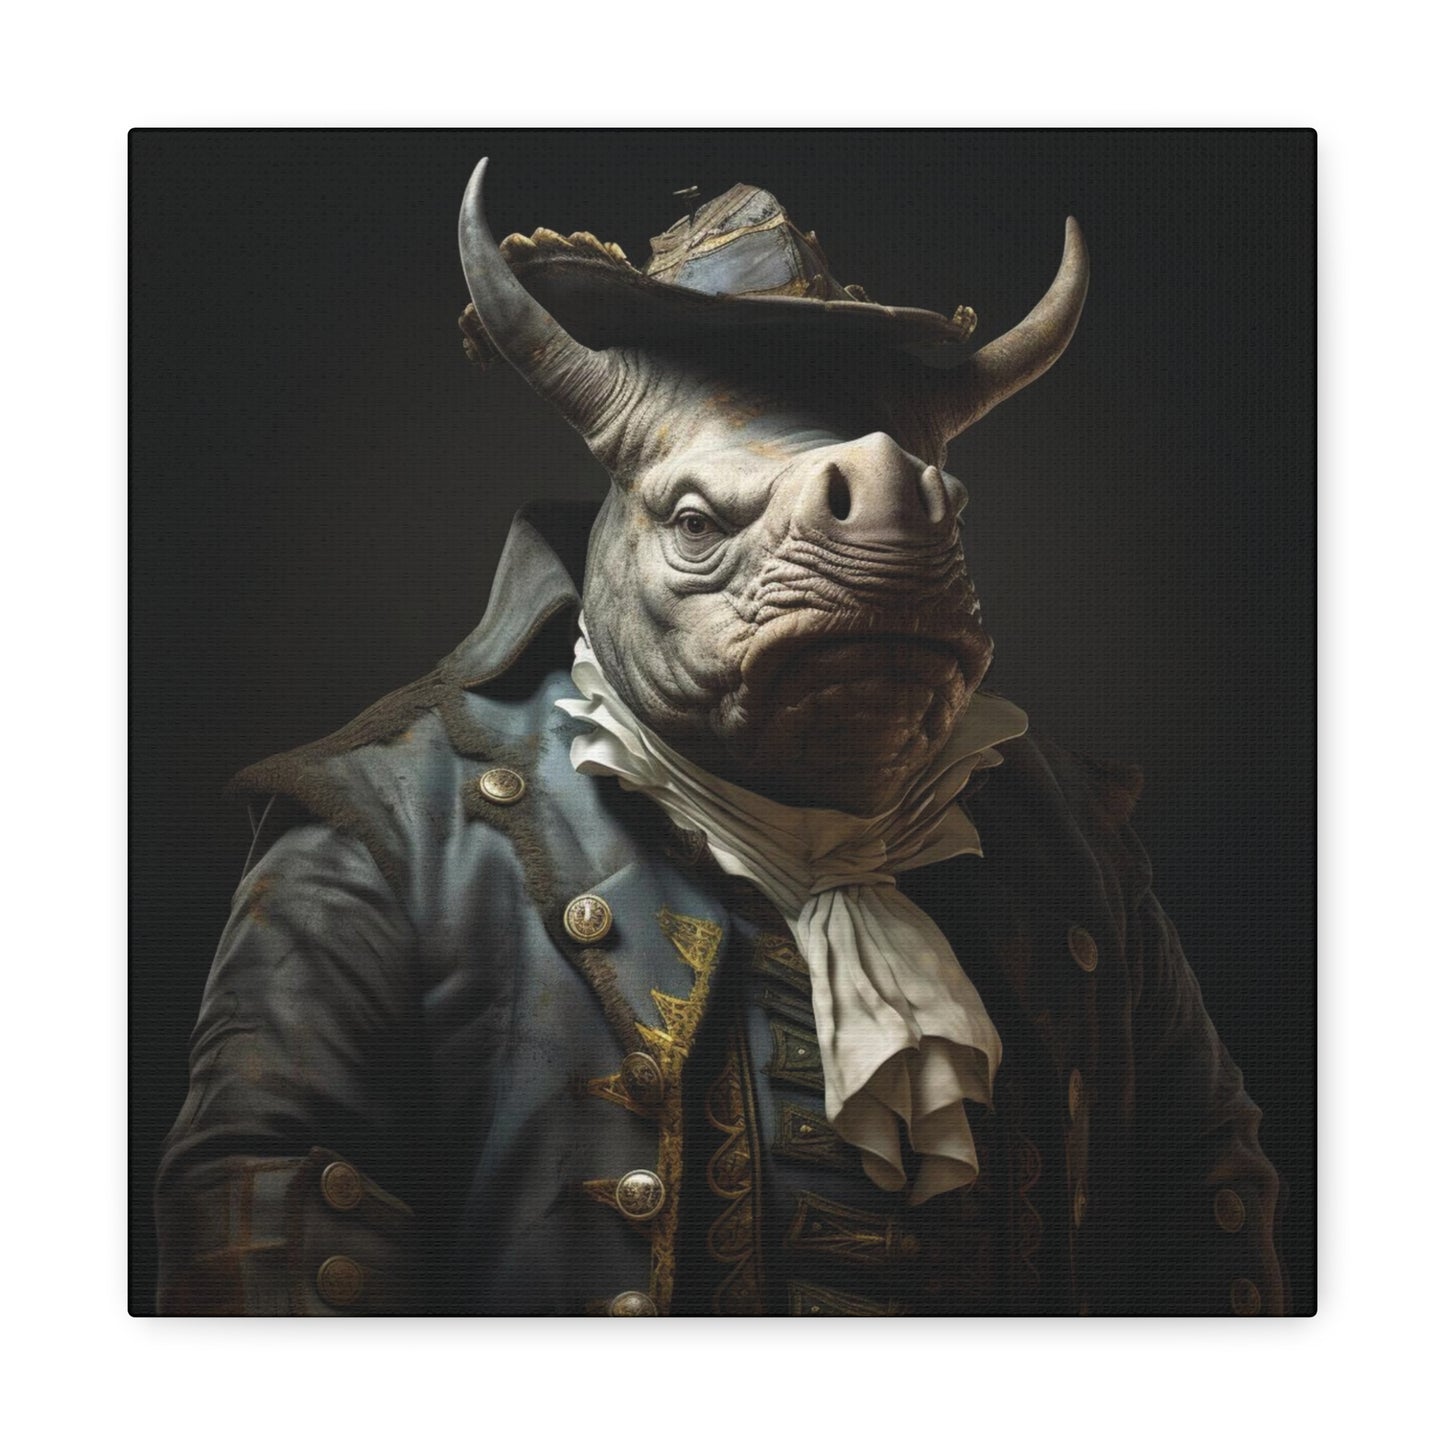 Rhino Pirate | Canvas Gallery Wrap | Wall Art